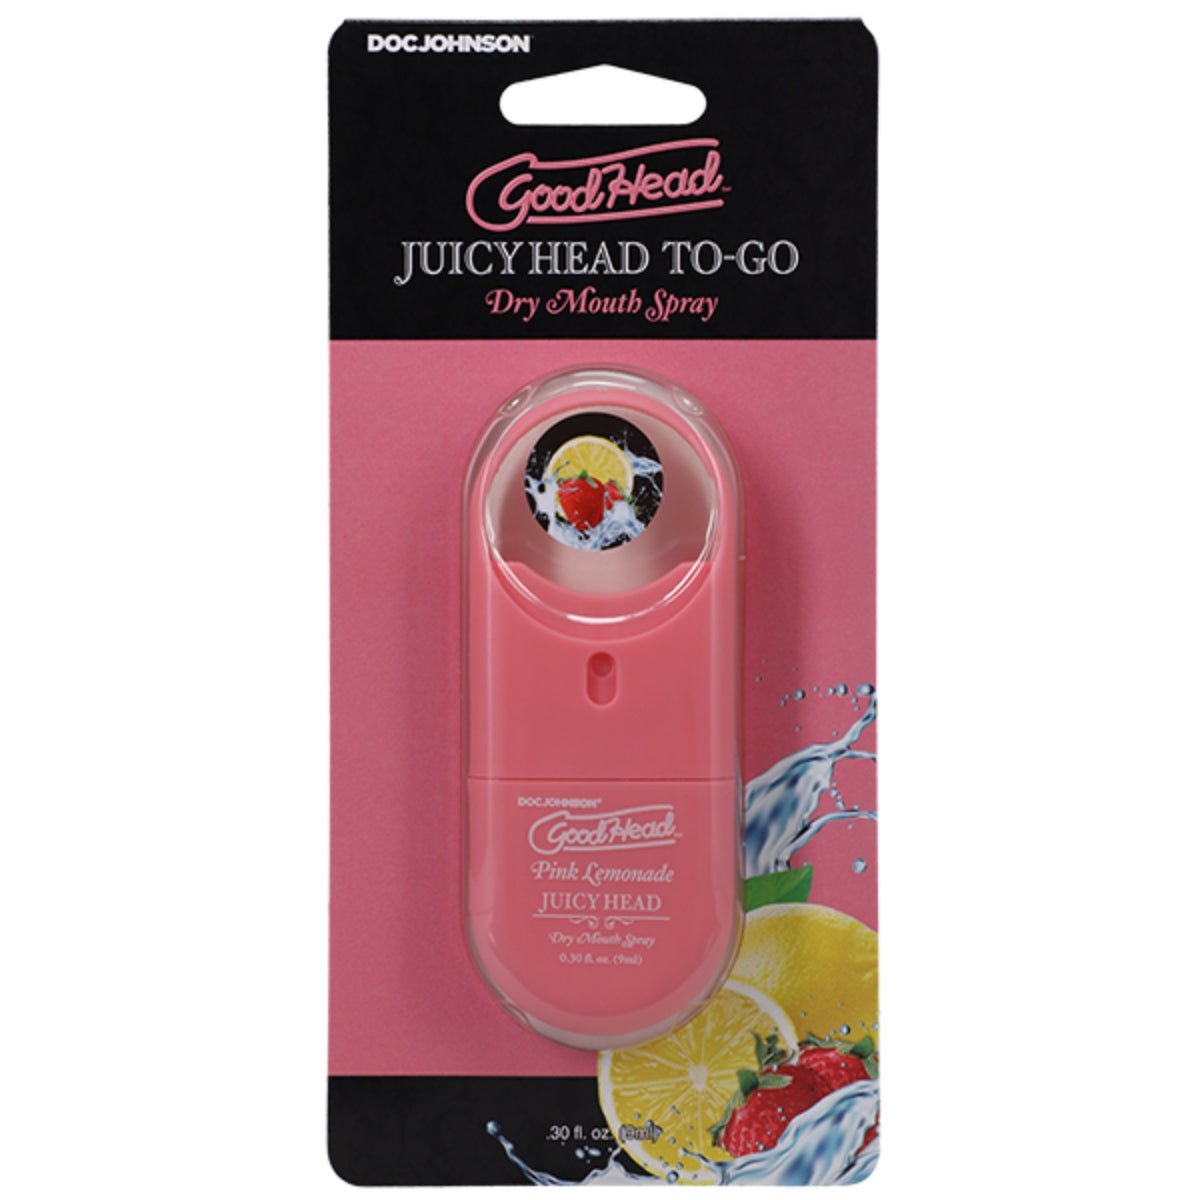 Flavoured Lube Goodhead Juicy Head Dry Mouth Spray To-Go Pink Lemonade 30 fl oz   